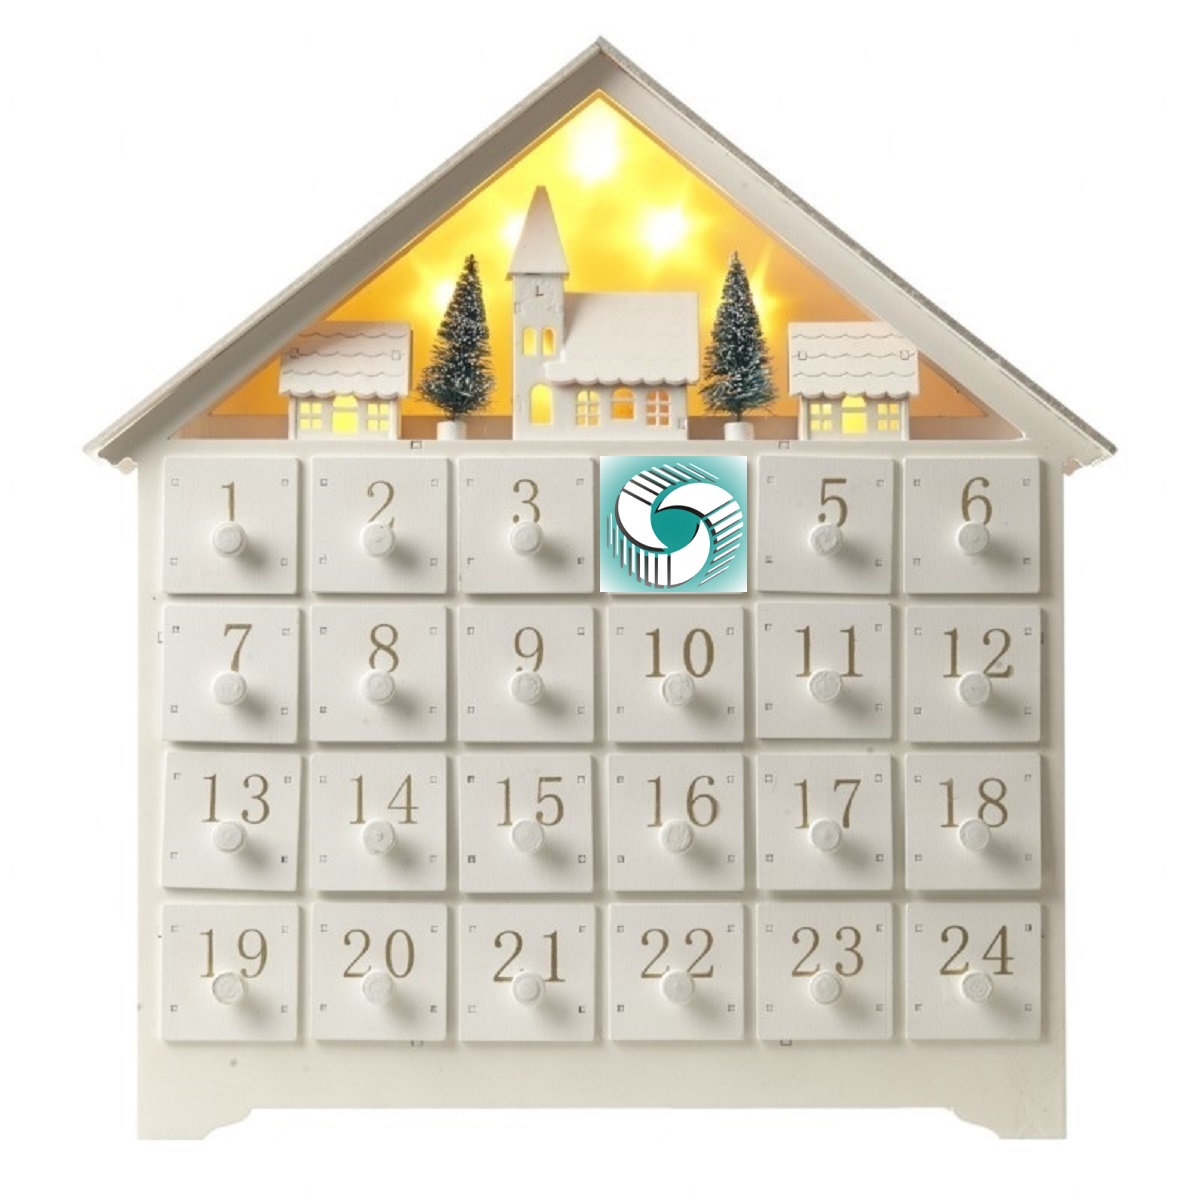 Day 4 – Frontier’s Advent Calendar